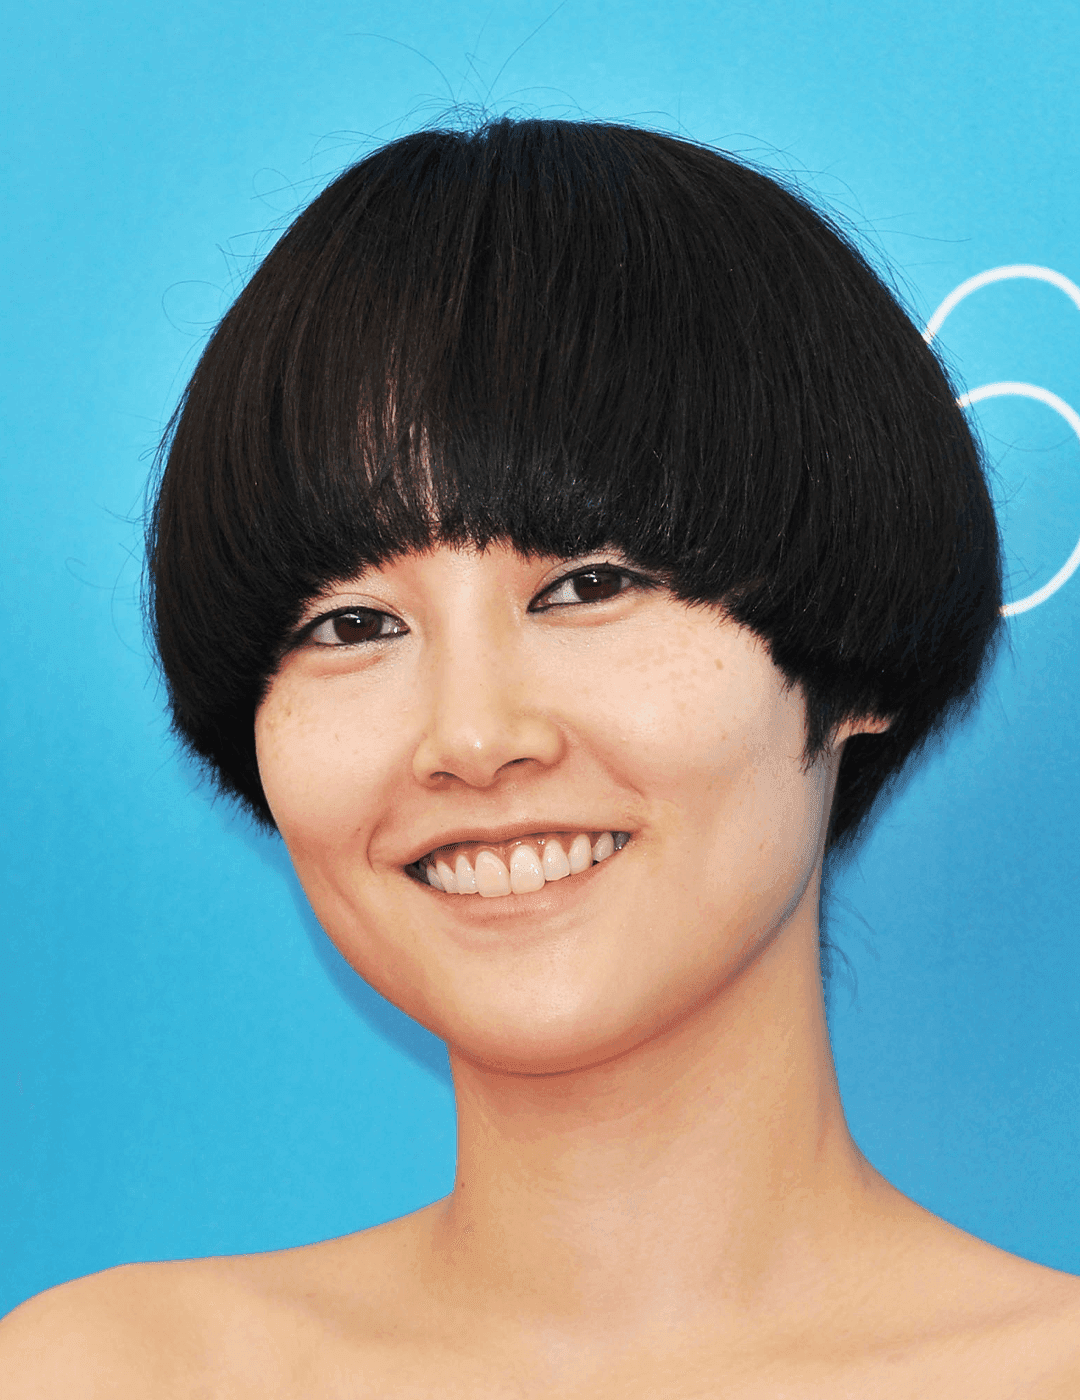 Smiling Rinko Kikuchi rocking a mushroom cut hairstyle